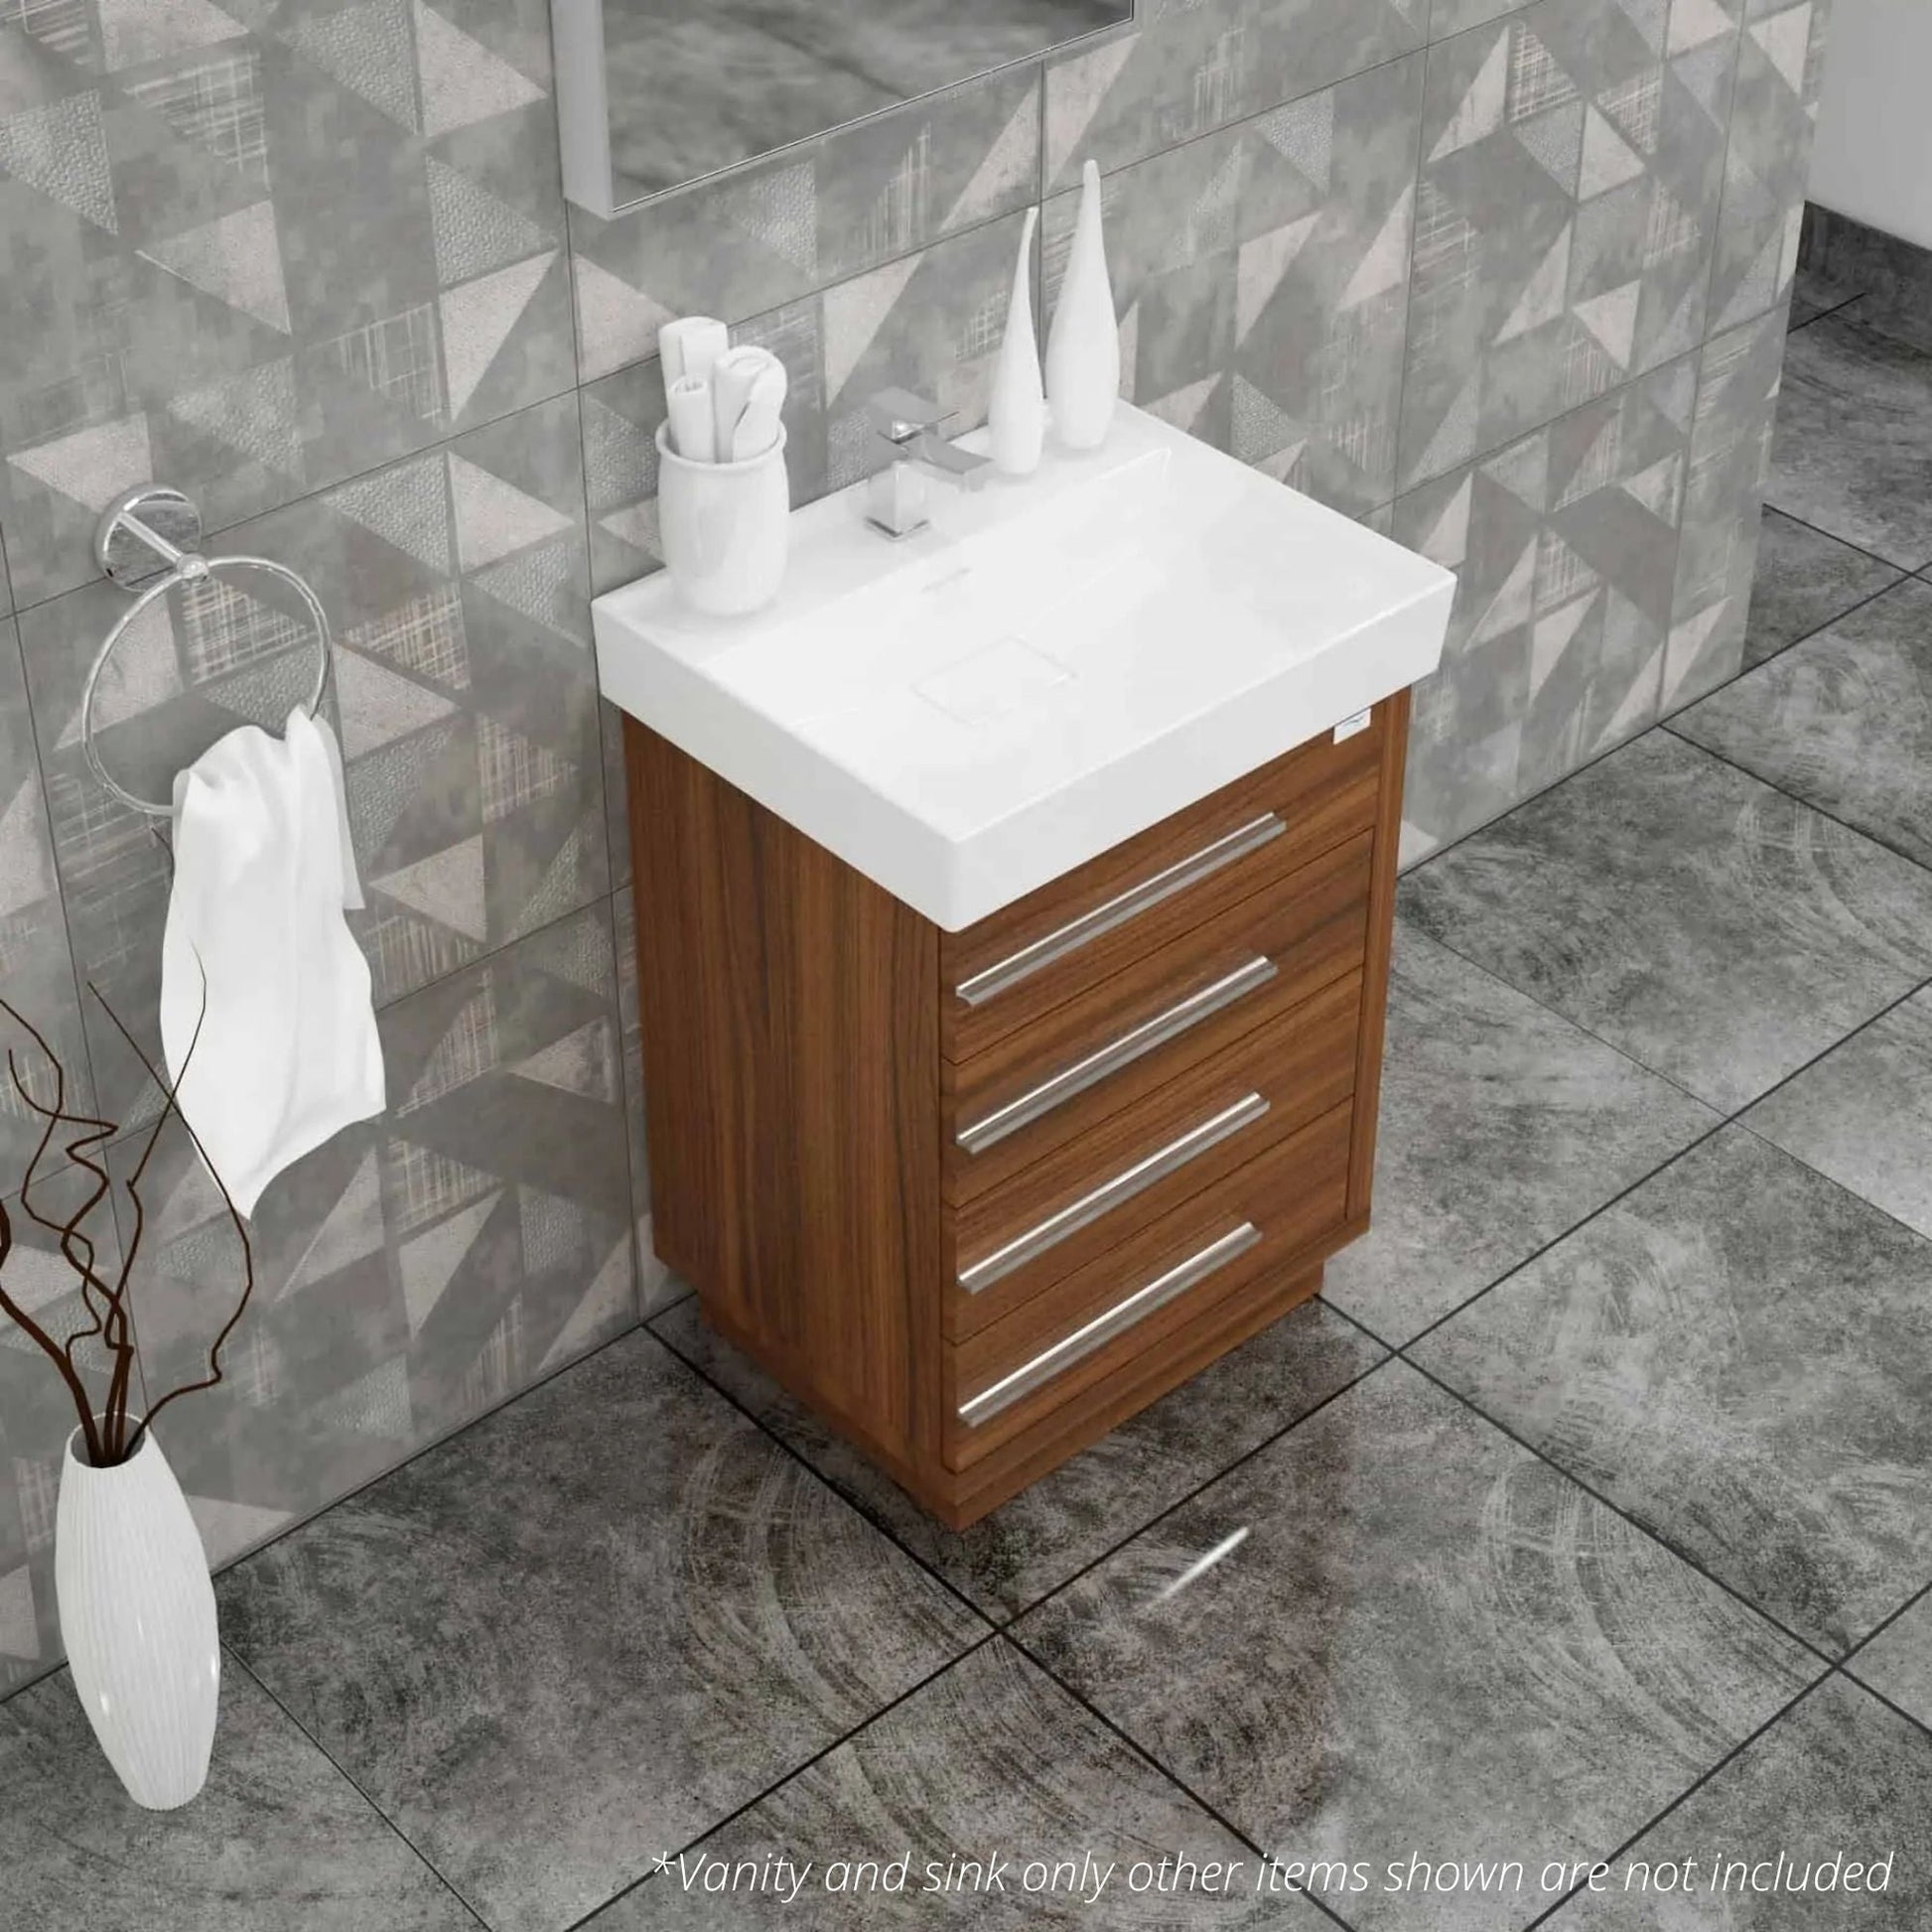 Casa Mare Domenico 32" Matte Walnut Bathroom Vanity and Ceramic Sink Combo With LED Mirror